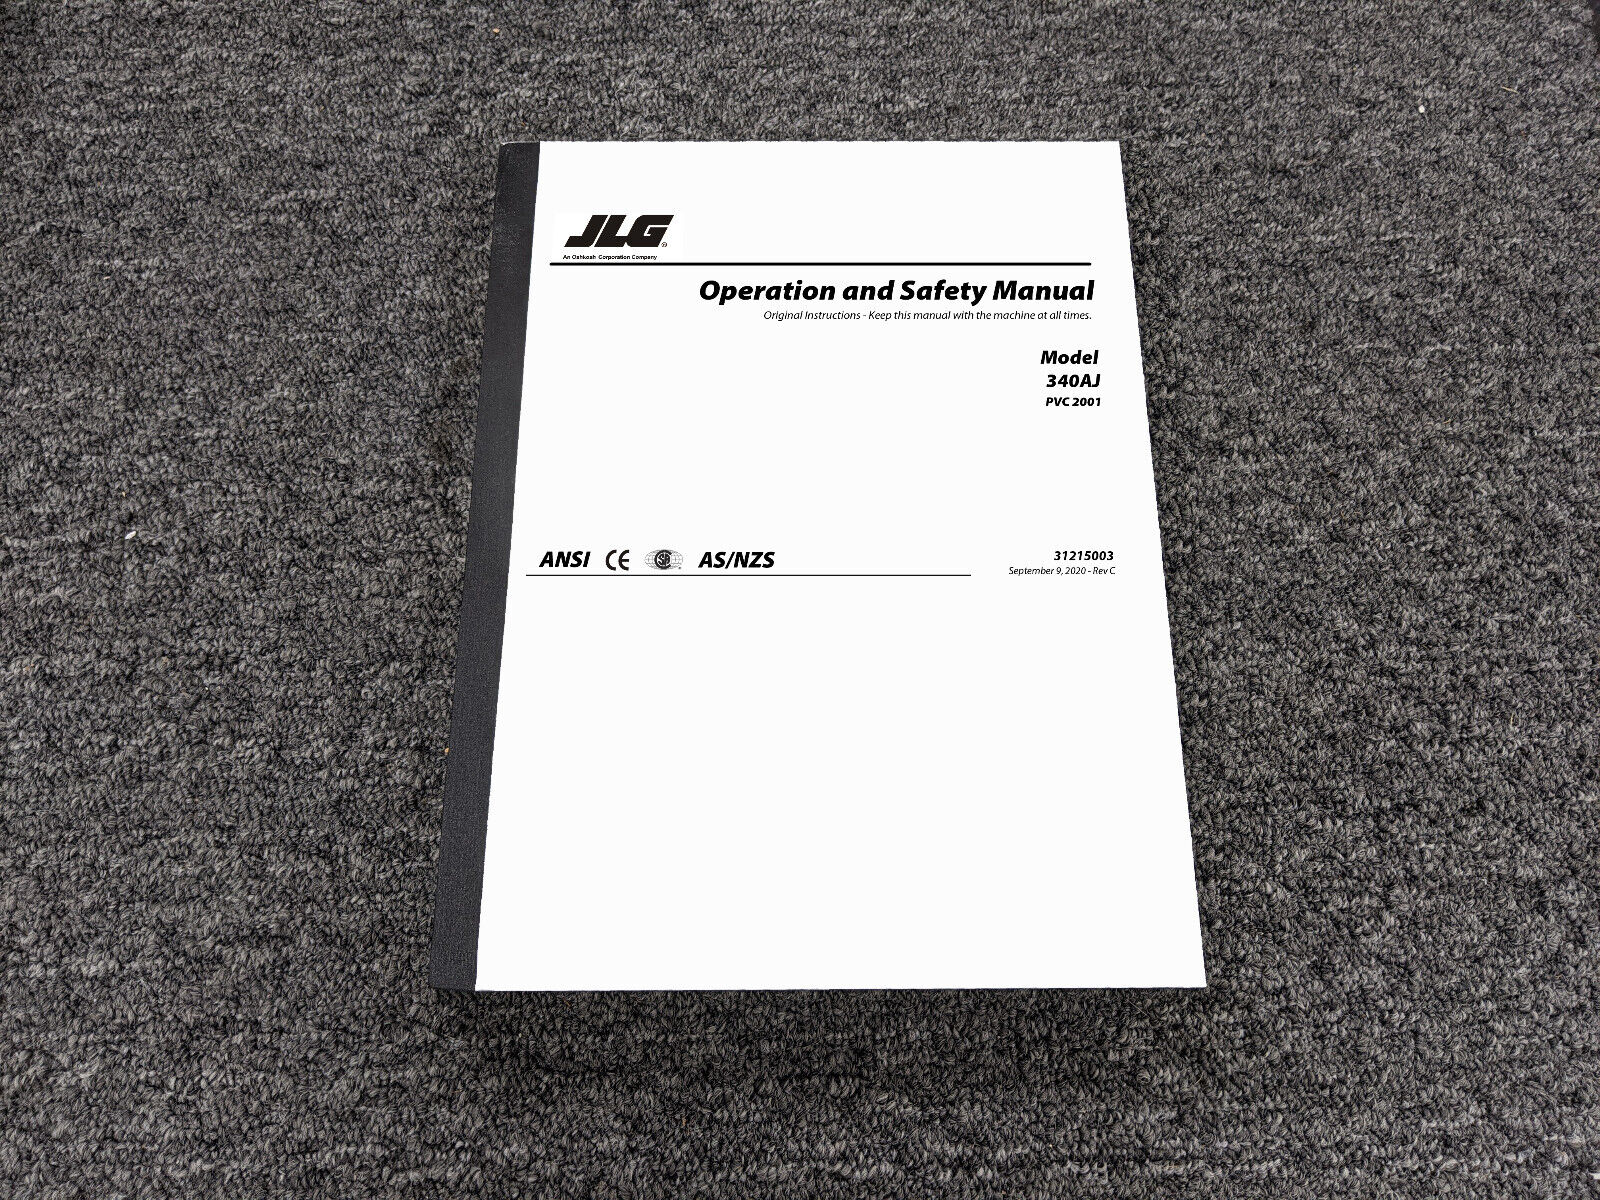 JLG 340AJ Boom Lift PVC 2001 Safety Owner Operator Manual User Guide 31215003